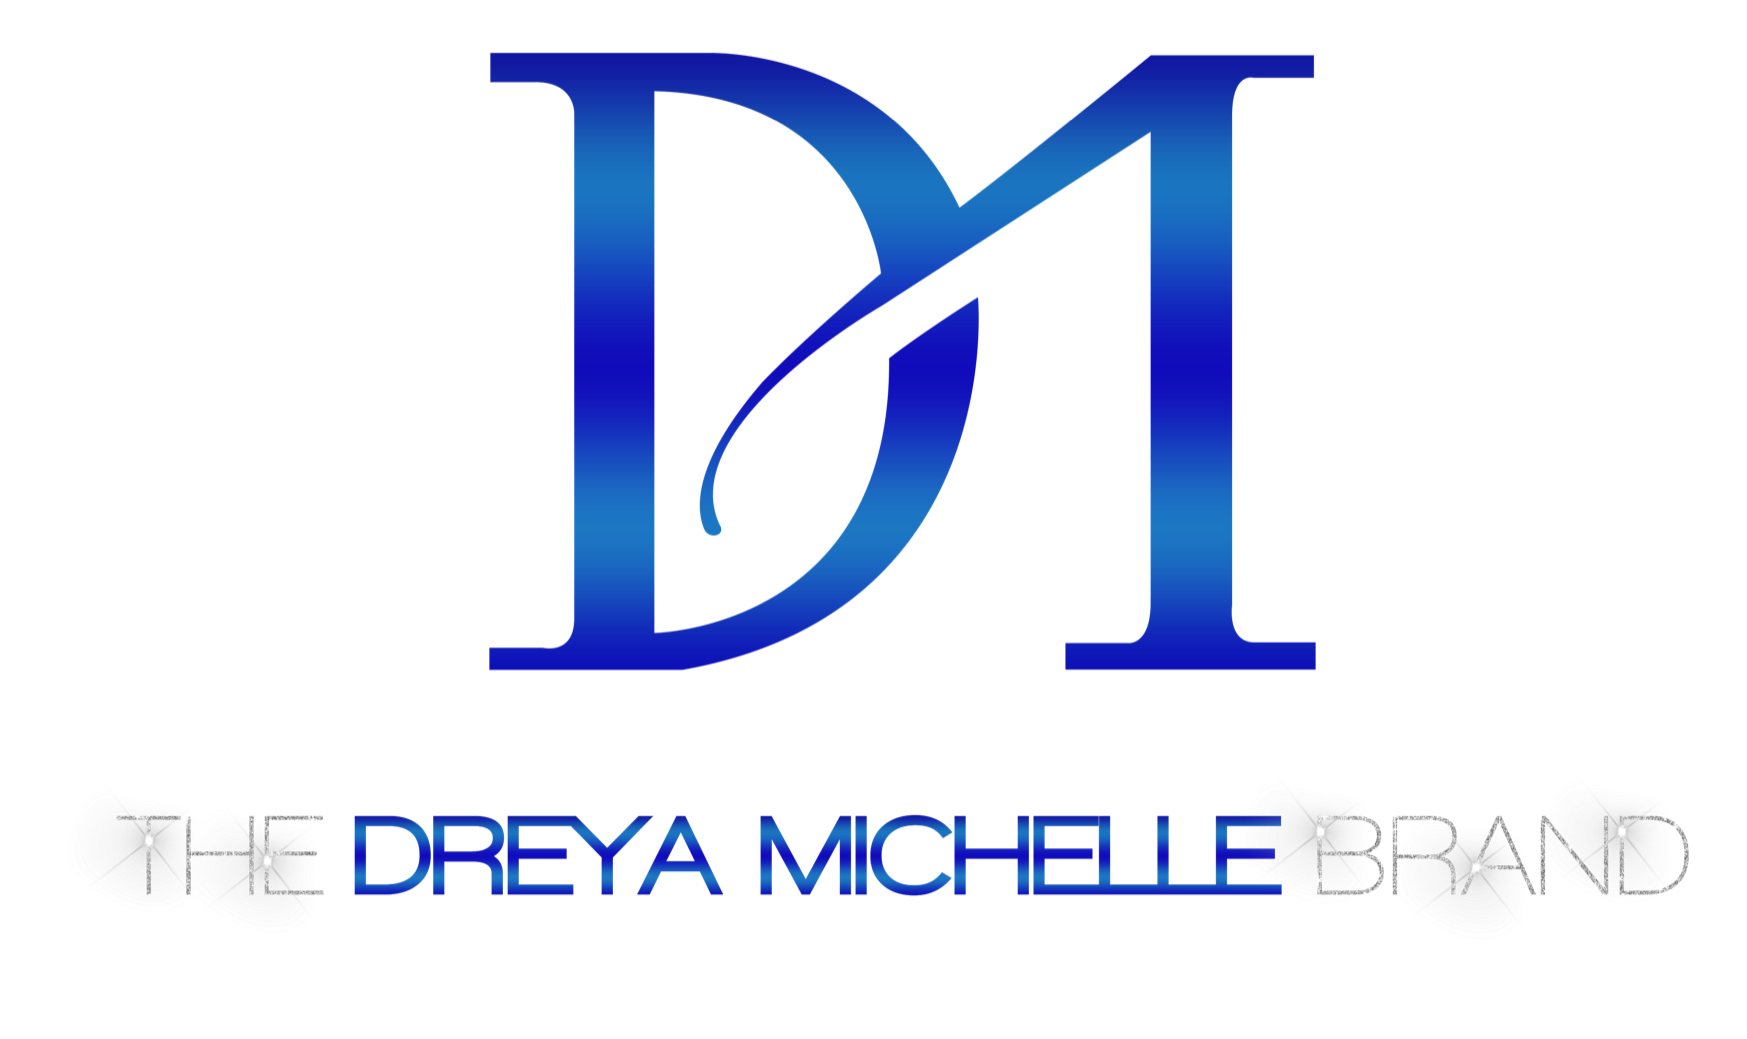 The Dreya Michelle Brand 